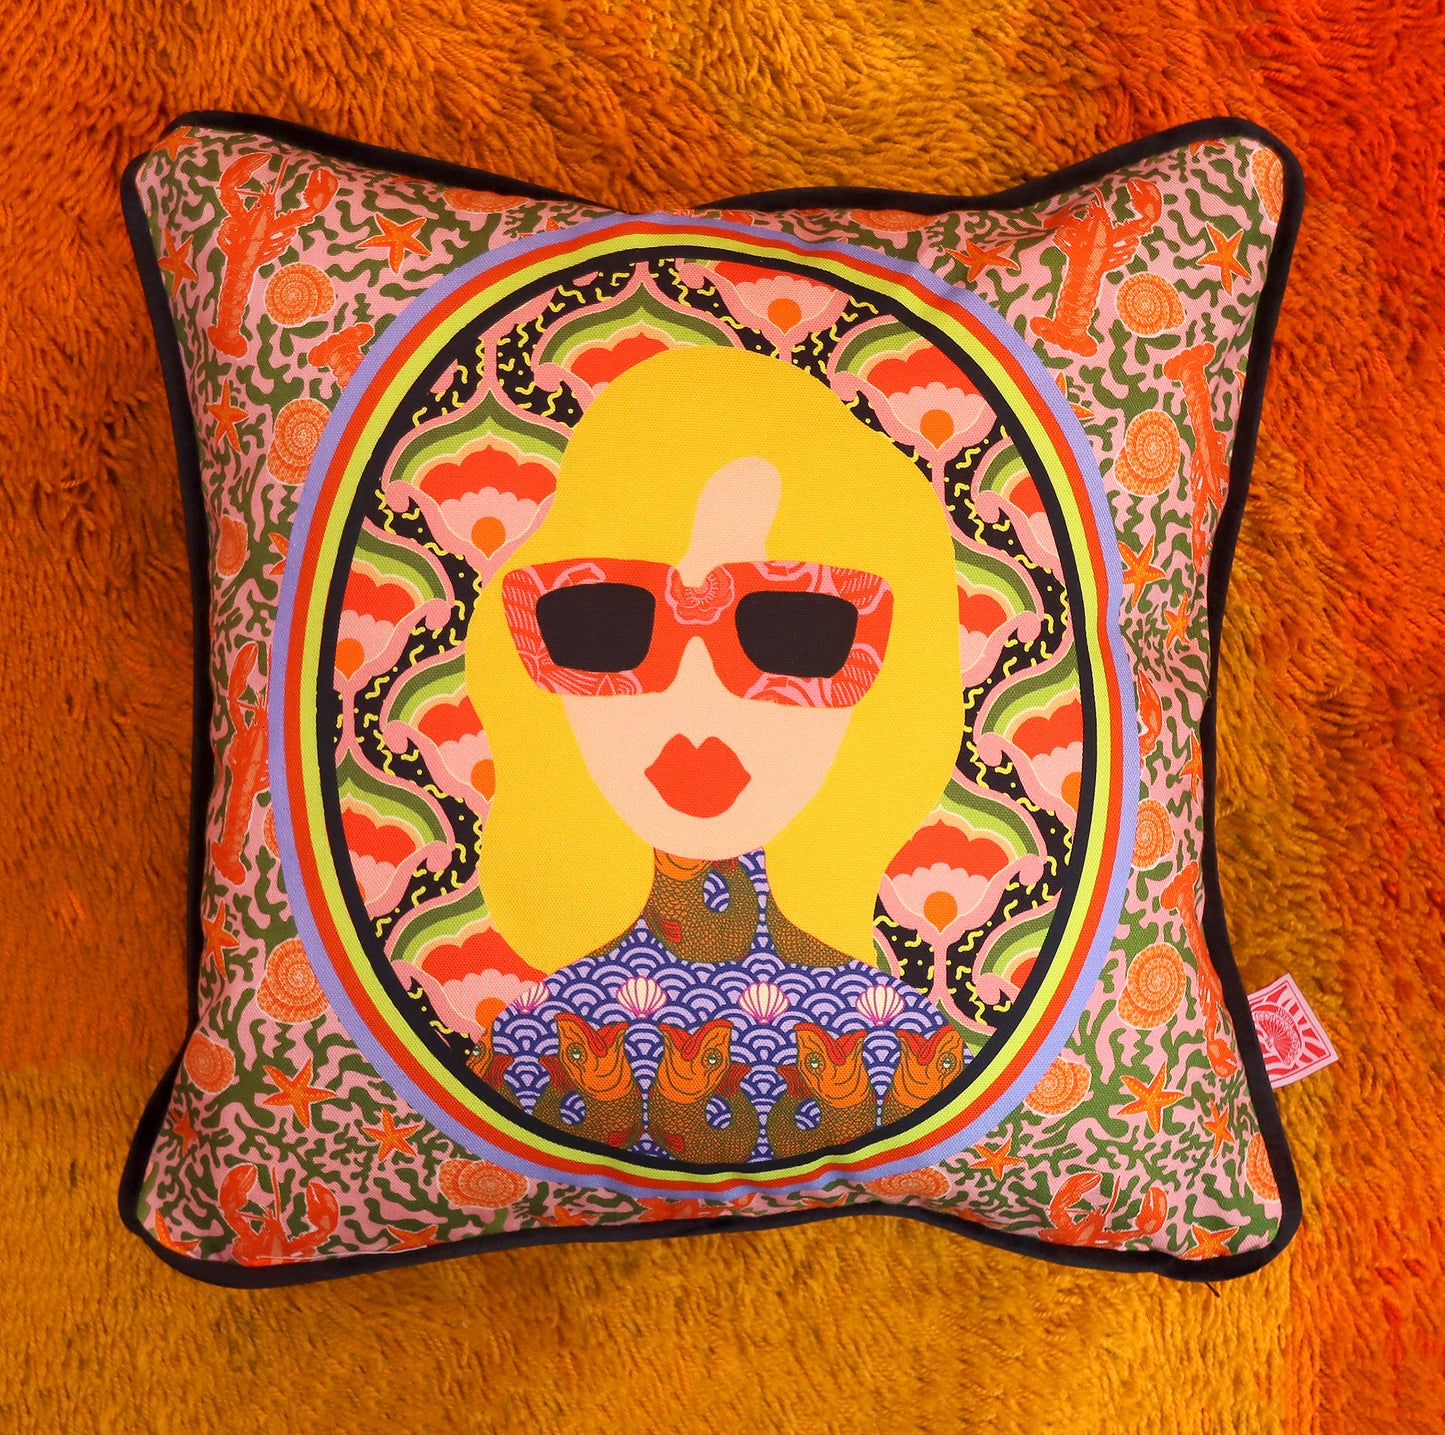 Funky Lady Print Cushion - Teal